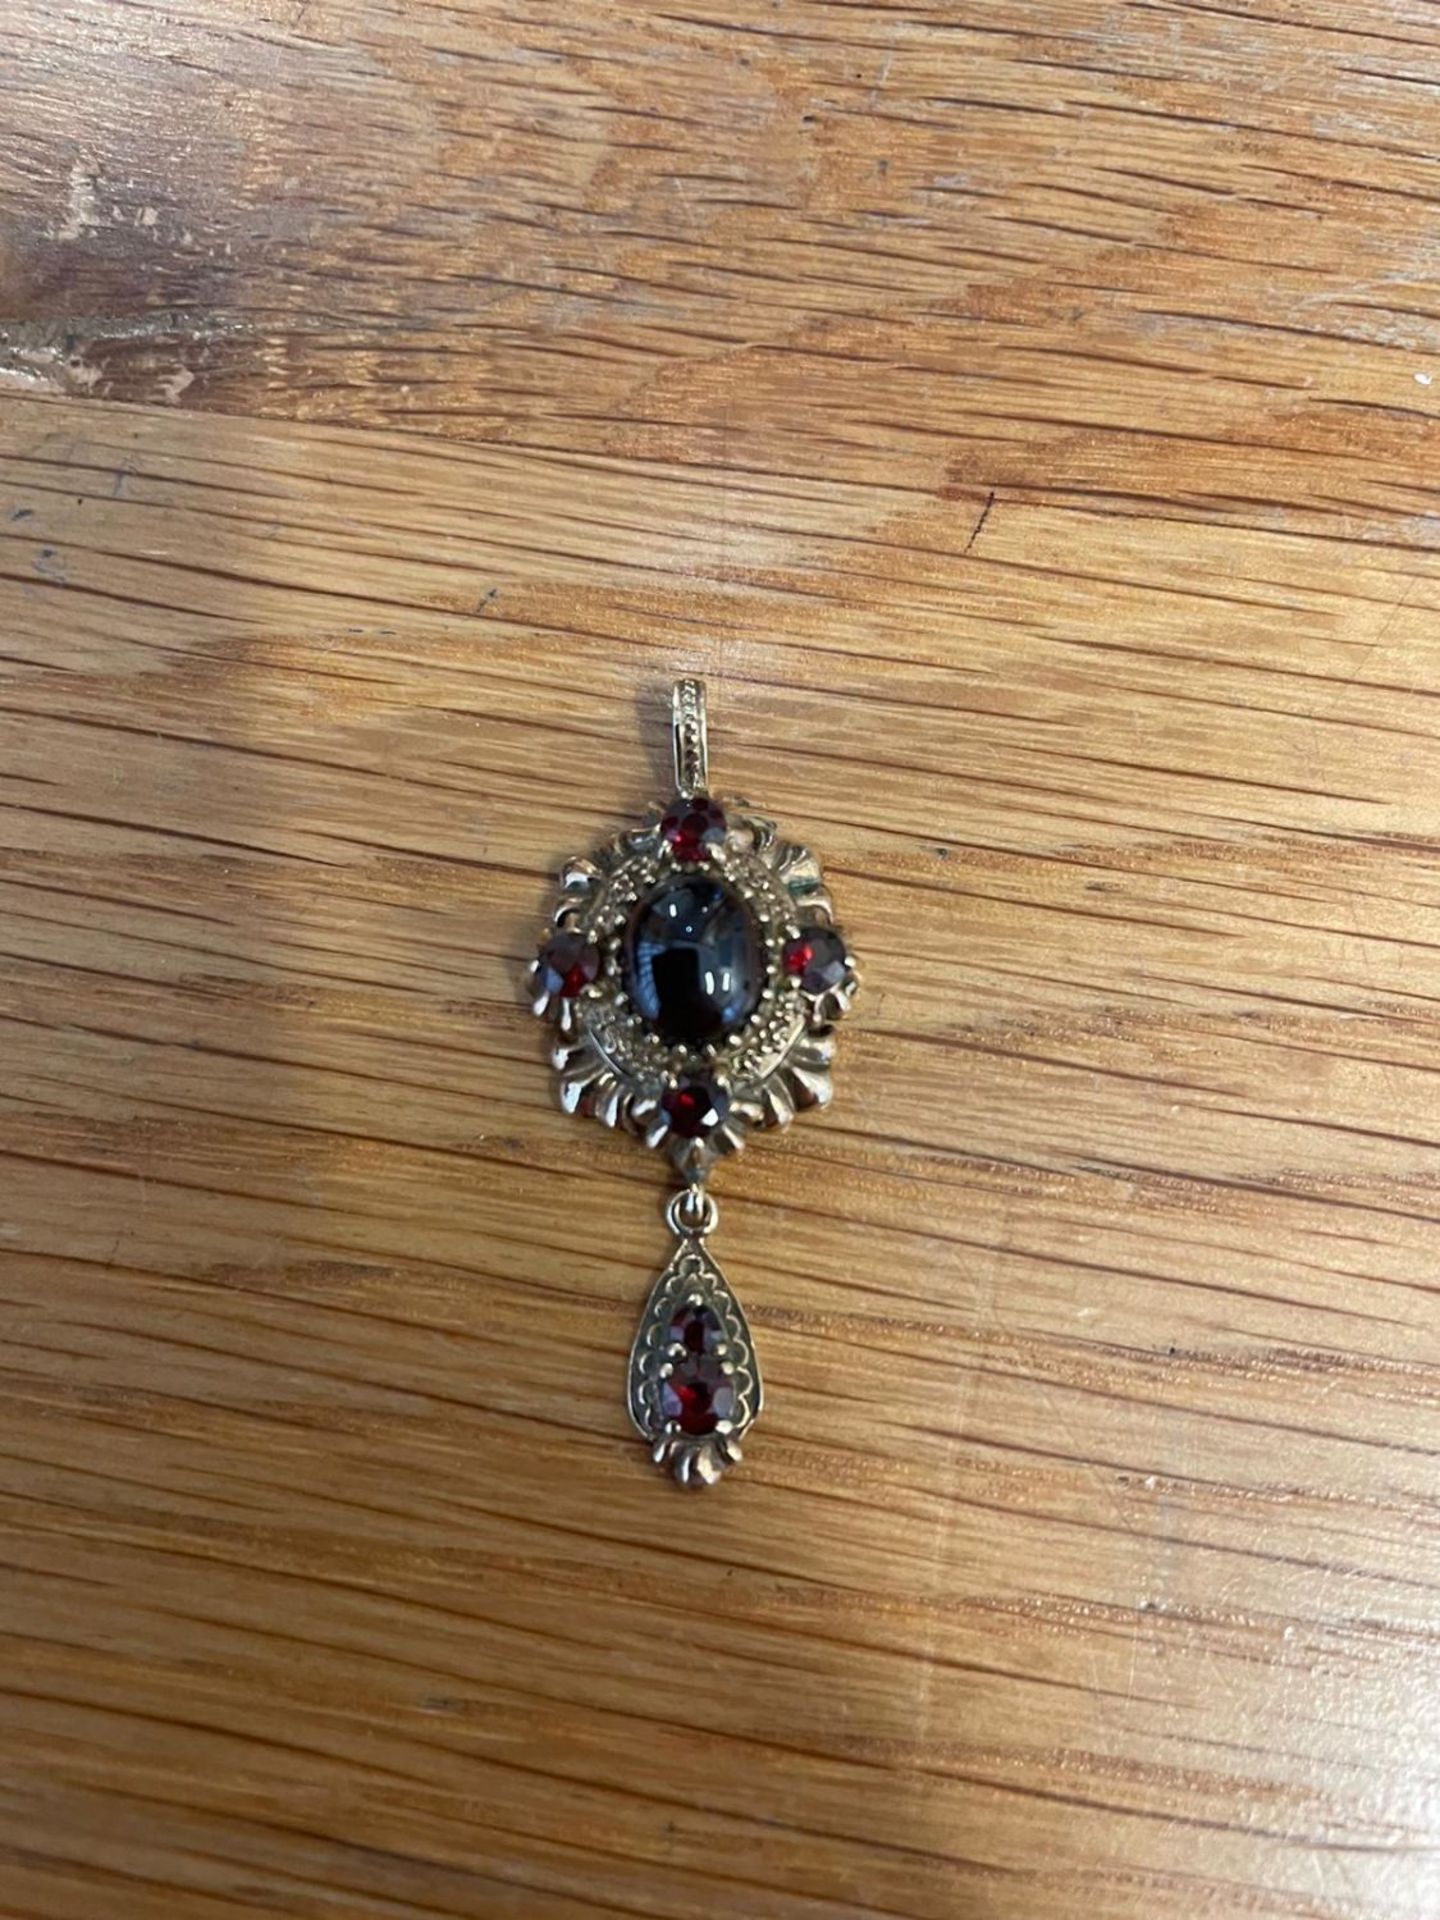 Vintage garnet pendant - Not hallmarked (Tested as 9K Gold) 4gm - Image 3 of 3